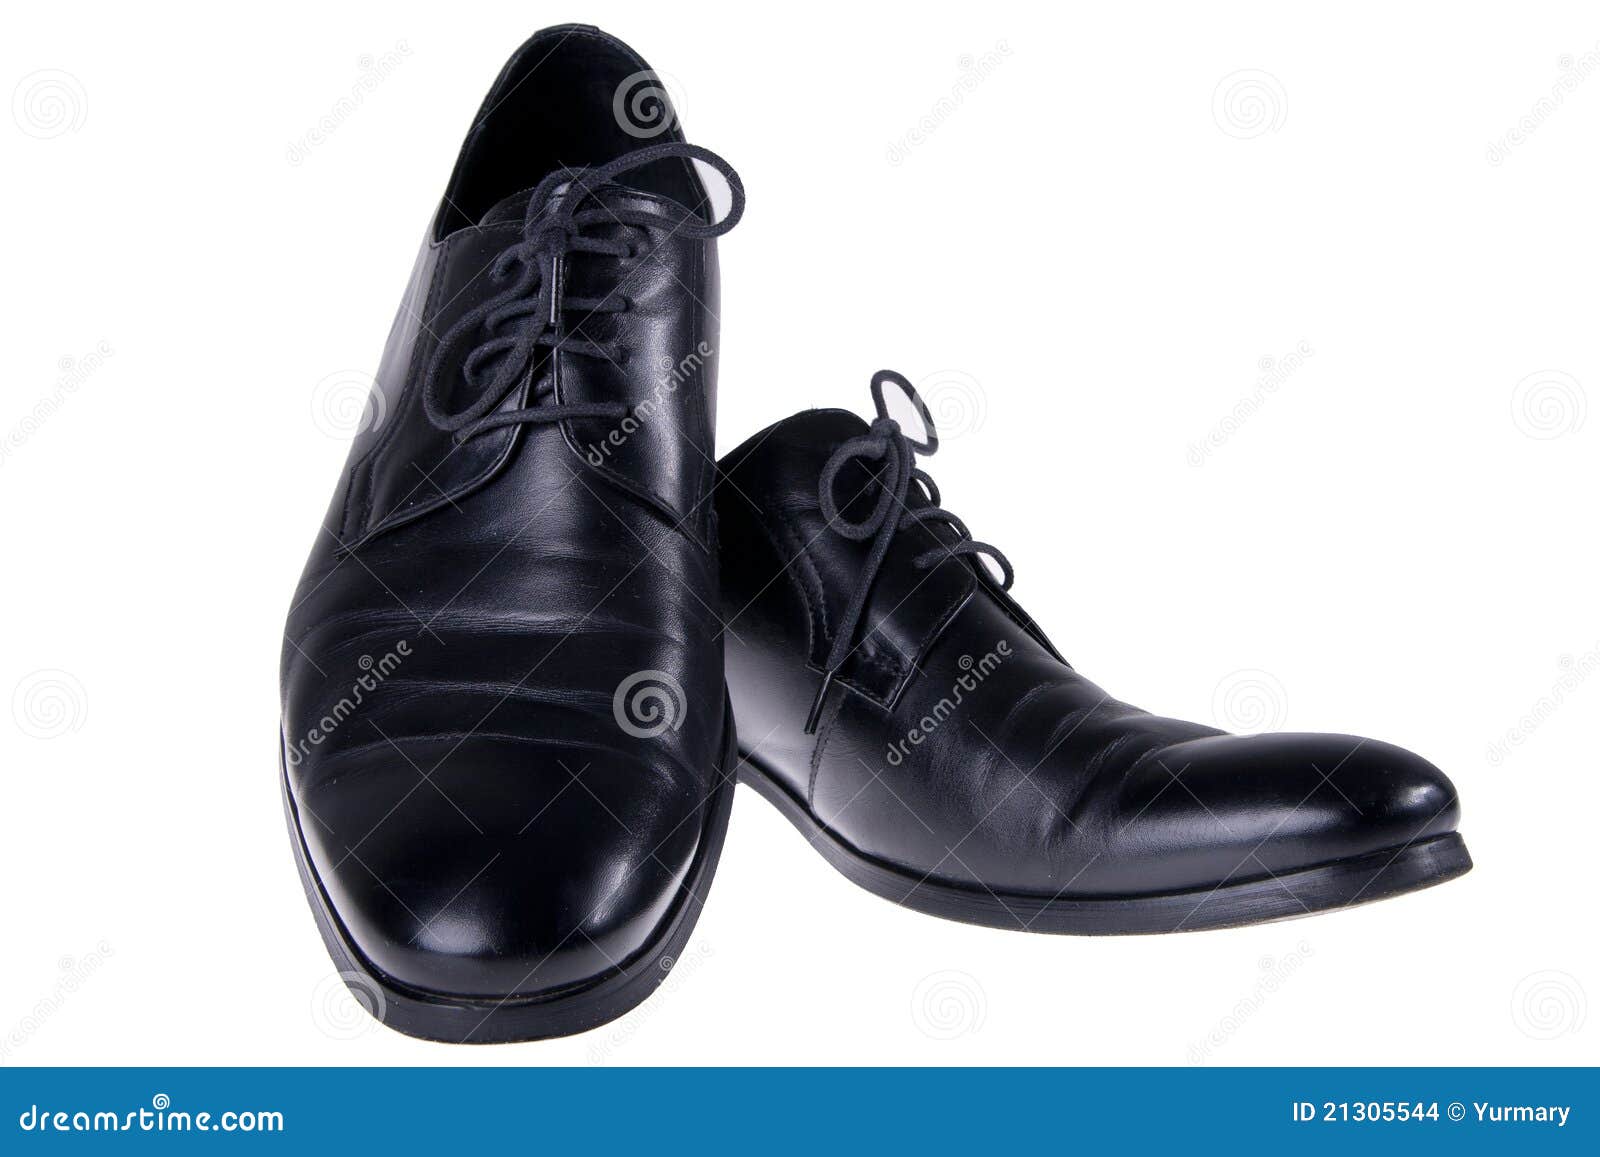 Classic black shoes stock photo. Image of beautiful, clothing - 21305544